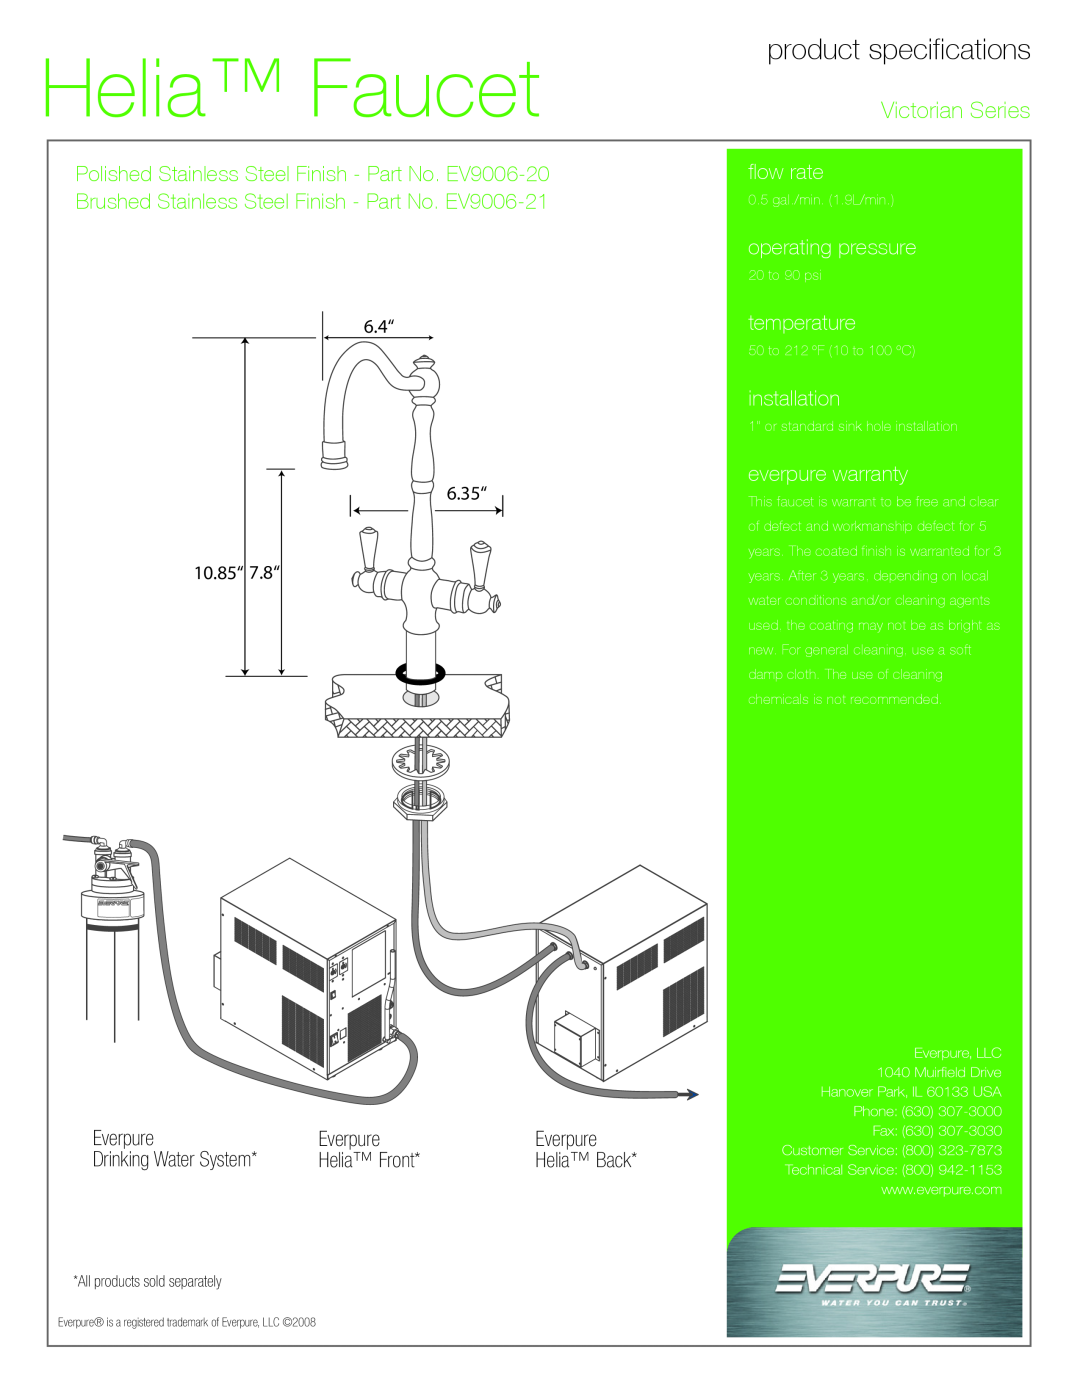 Everpure EV9006-20 manual Everpure, Drinking Water System, Helia Front, 6.4“ 6.35“ 10.85“ 7.8“, Helia Back, Helia Faucet 